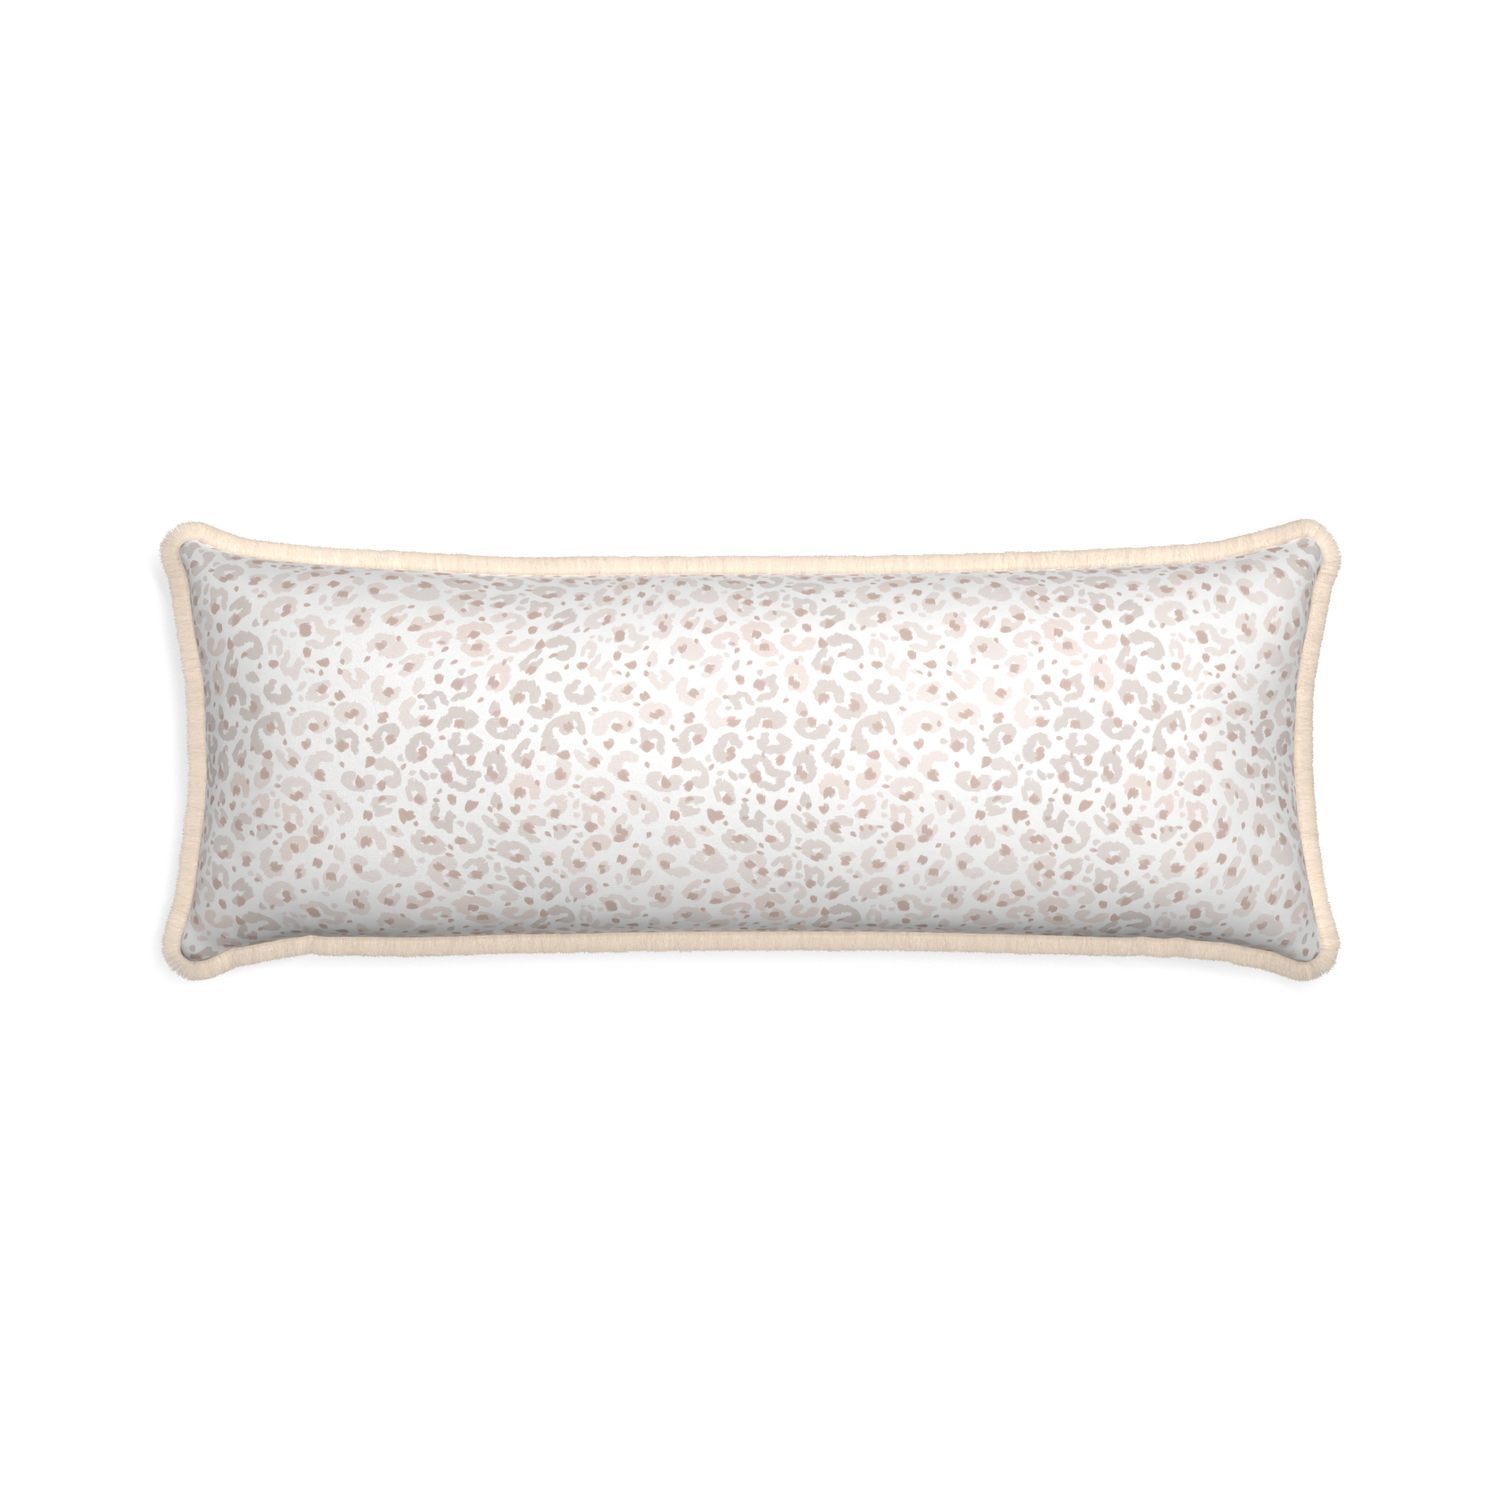 Xl-lumbar rosie custom pillow with cream fringe on white background